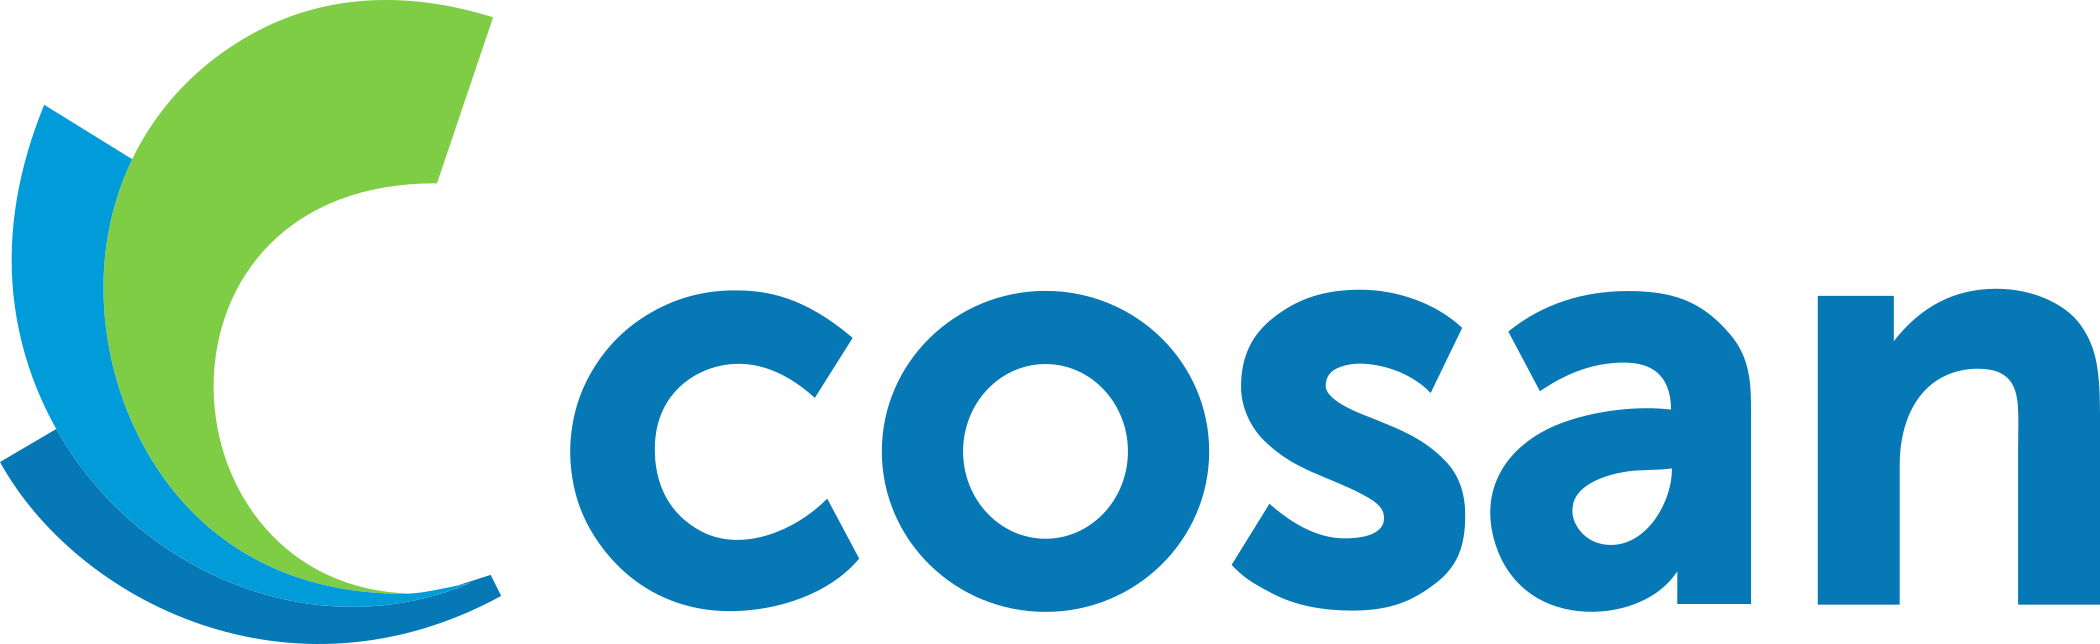 Cosan Logo.